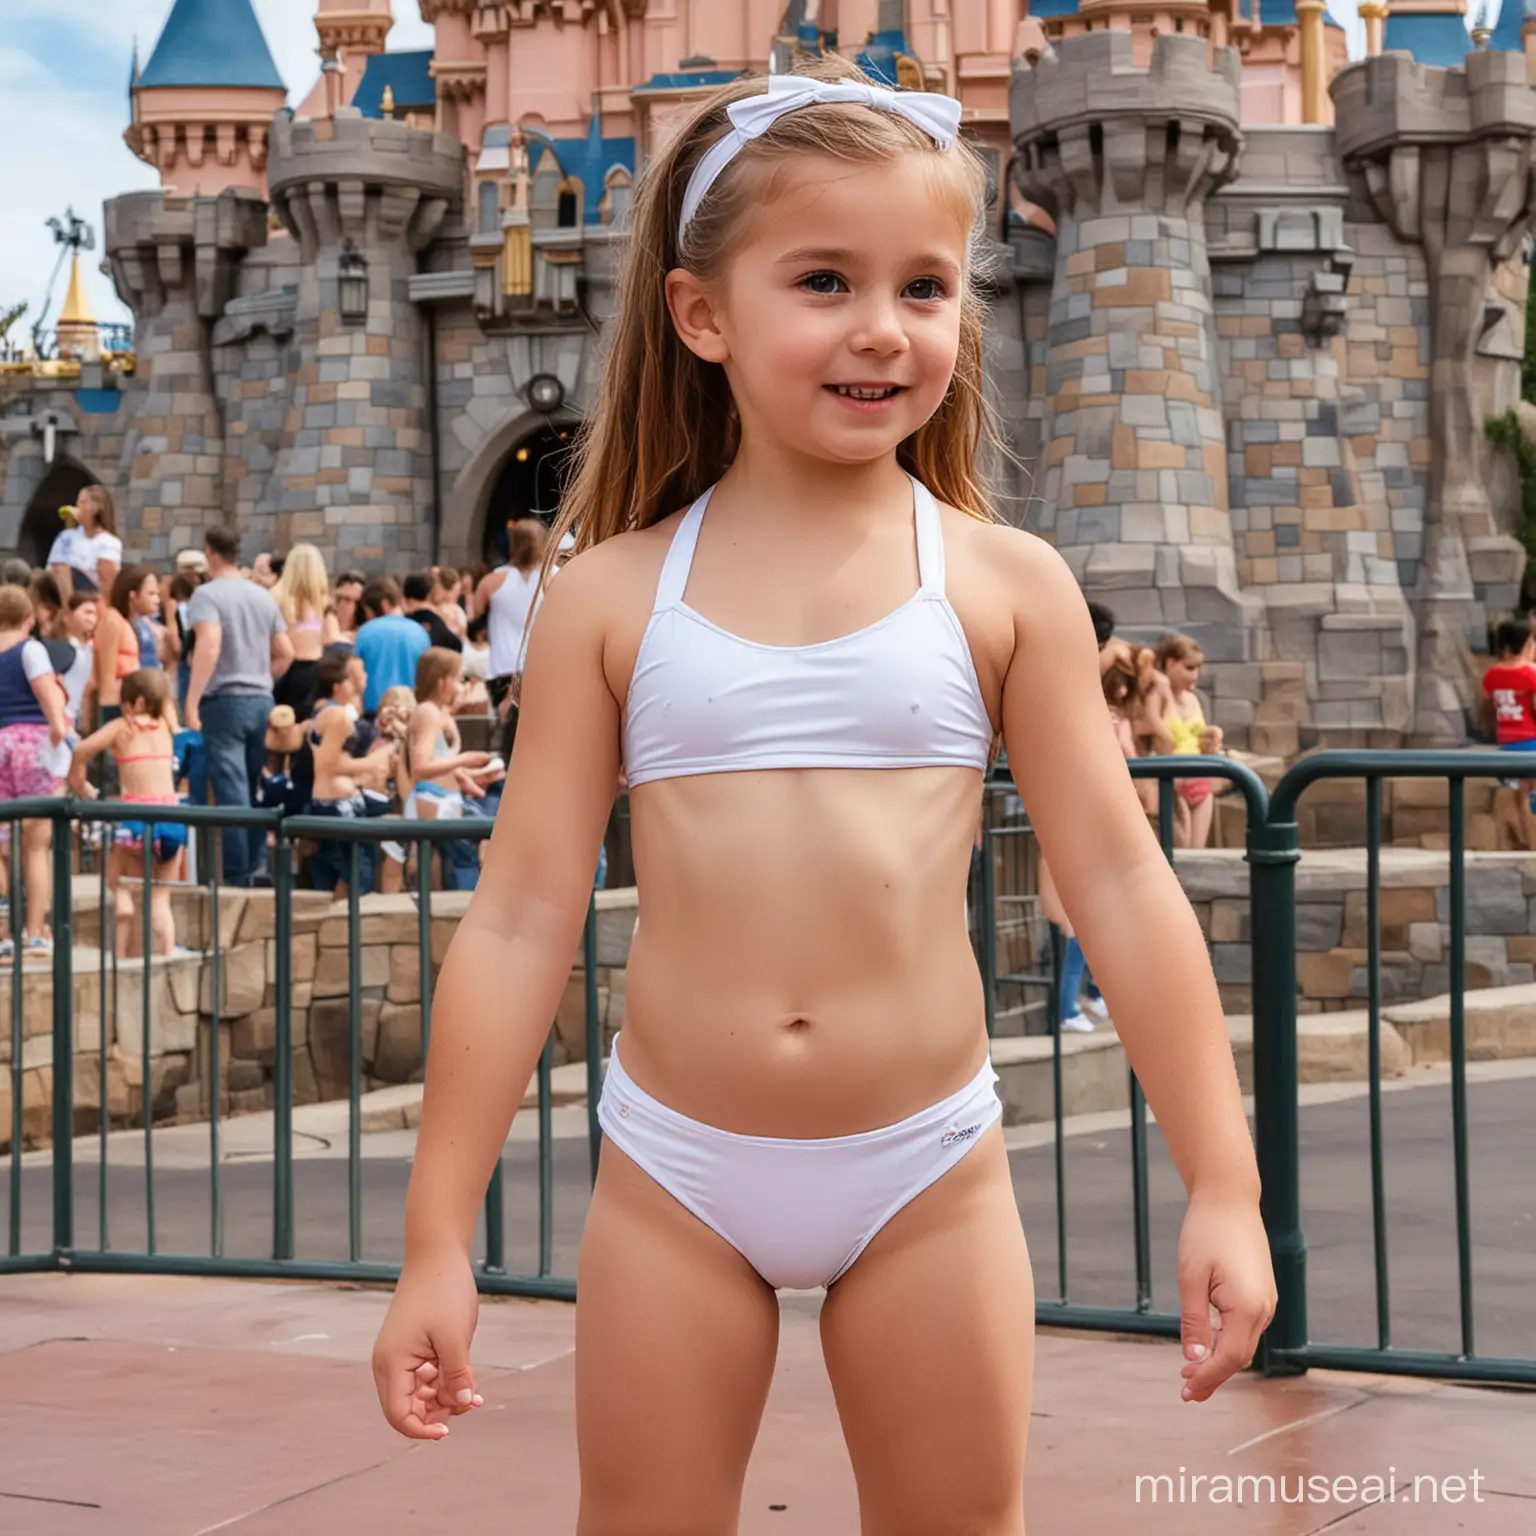 A 7-year-old girl in white tight bikini, cameltoe, at Disneyland.